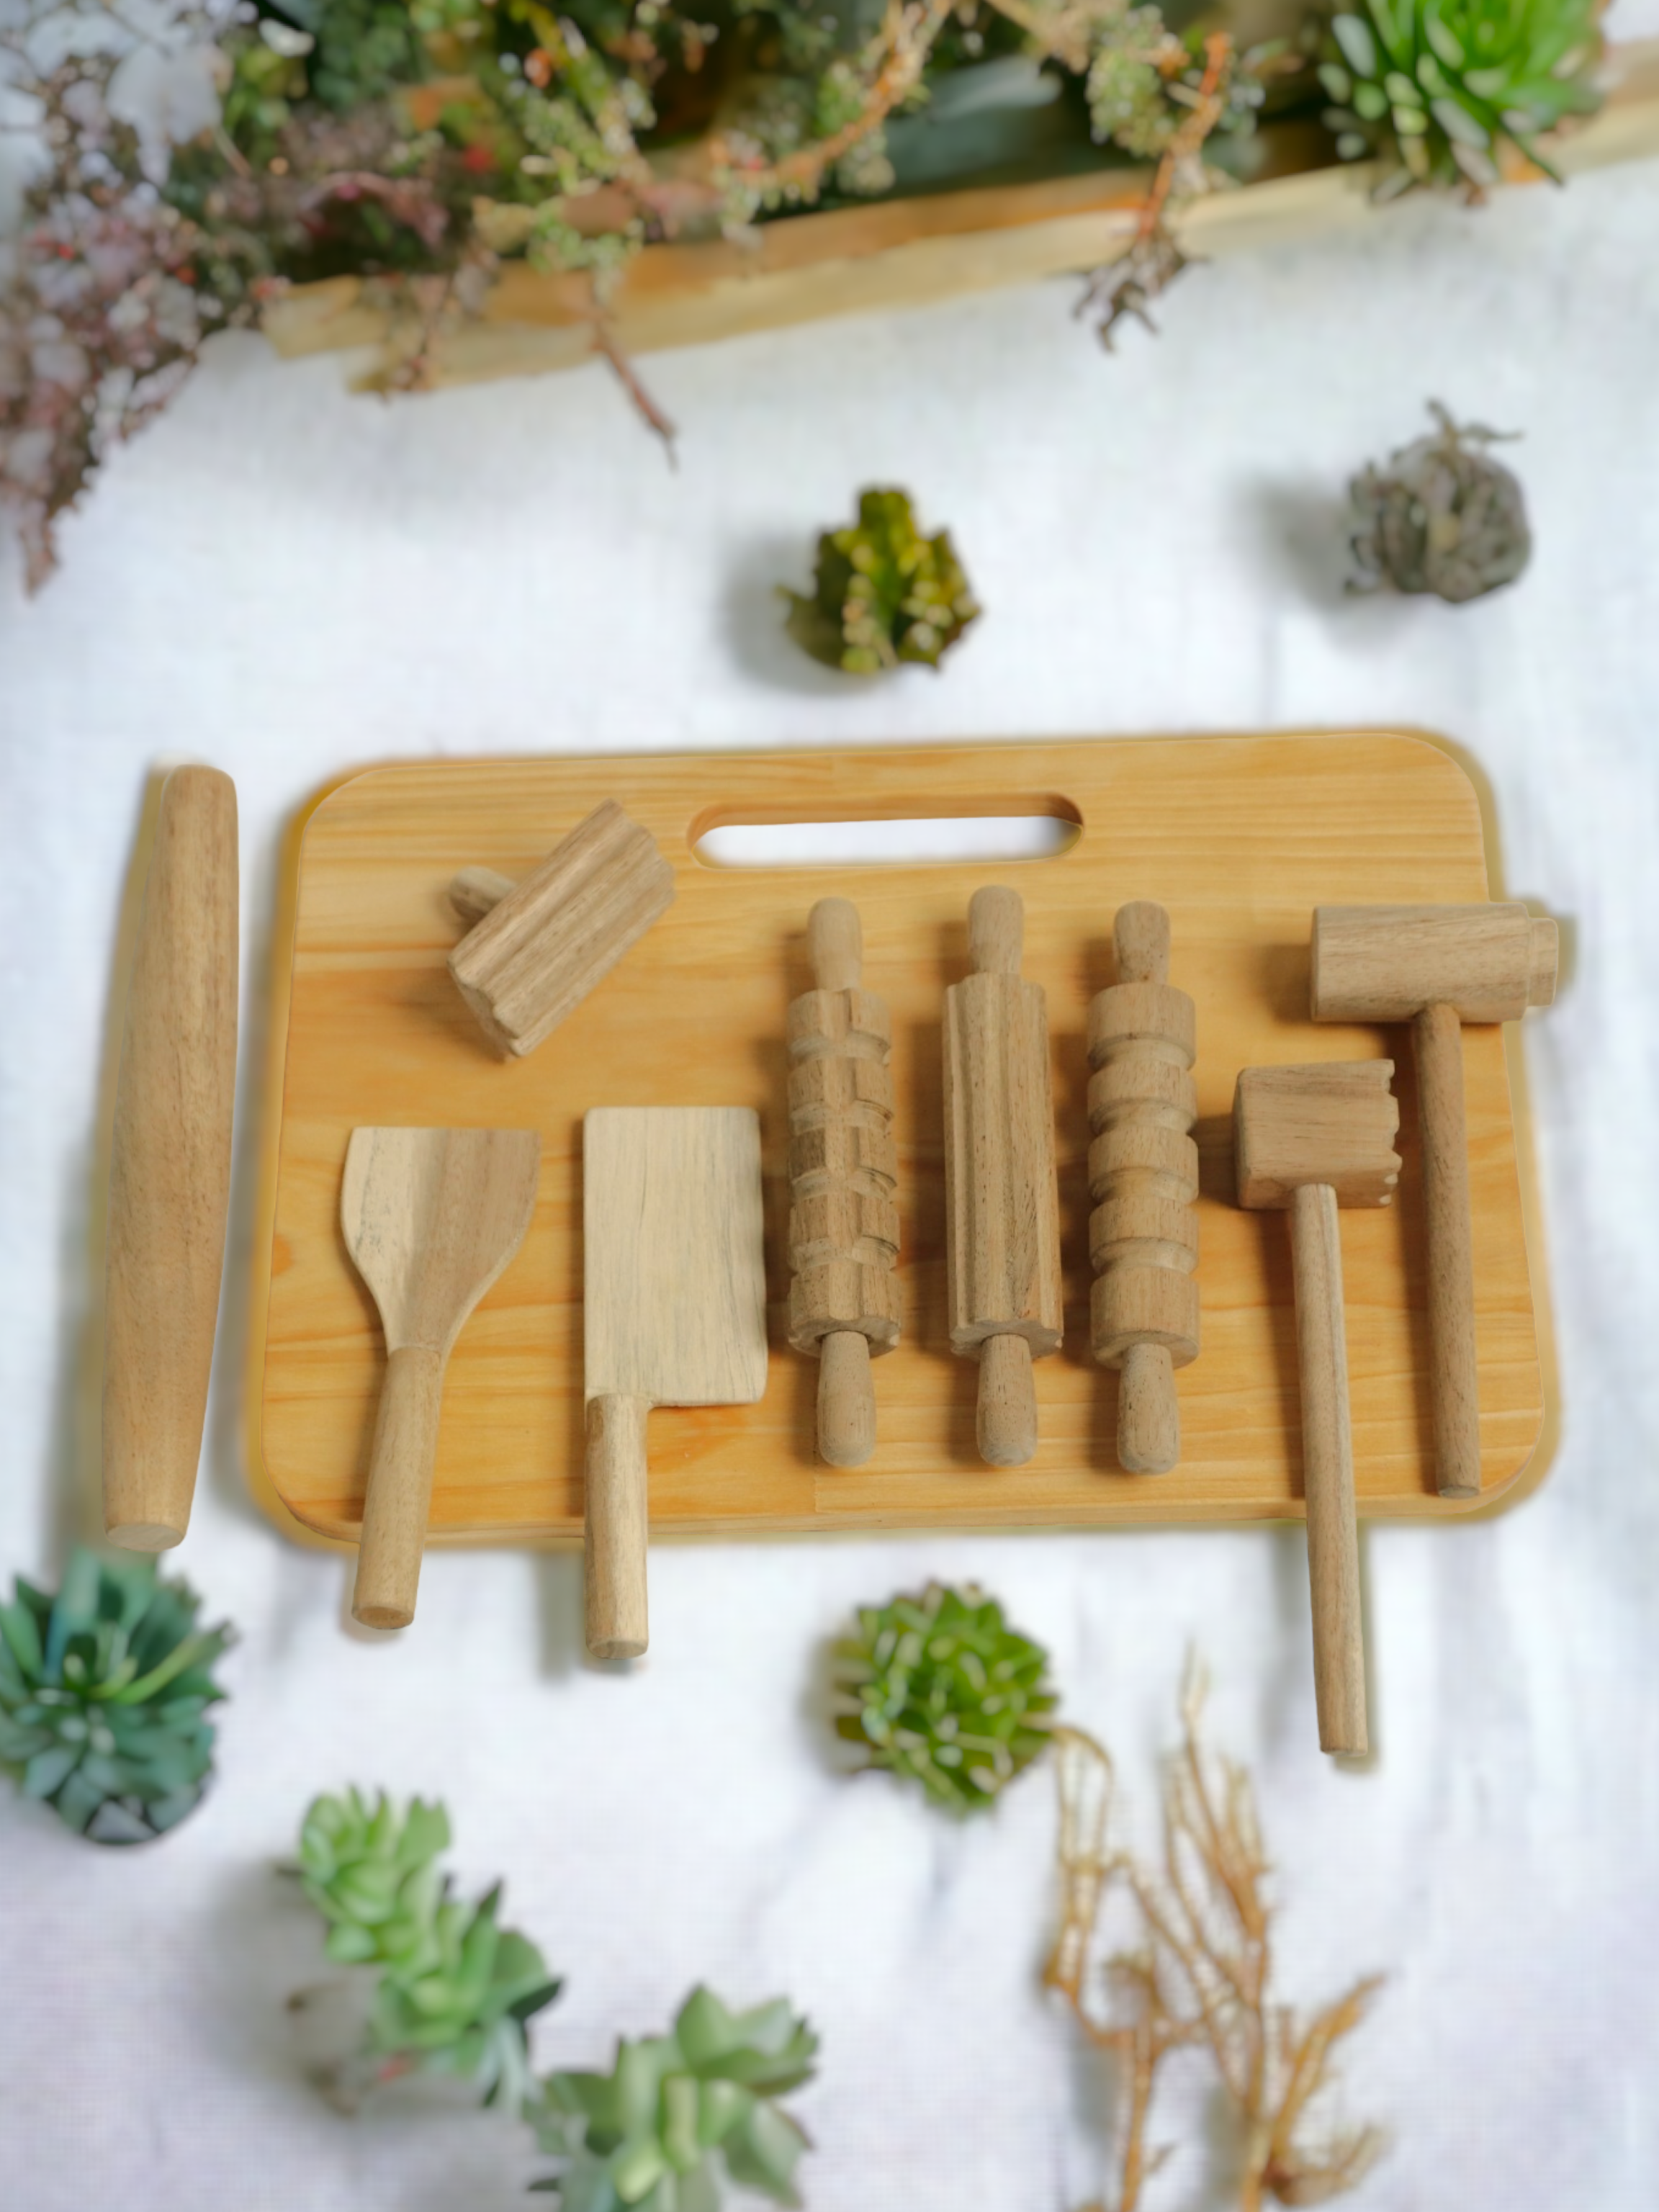 Wooden Playdough Tool Set